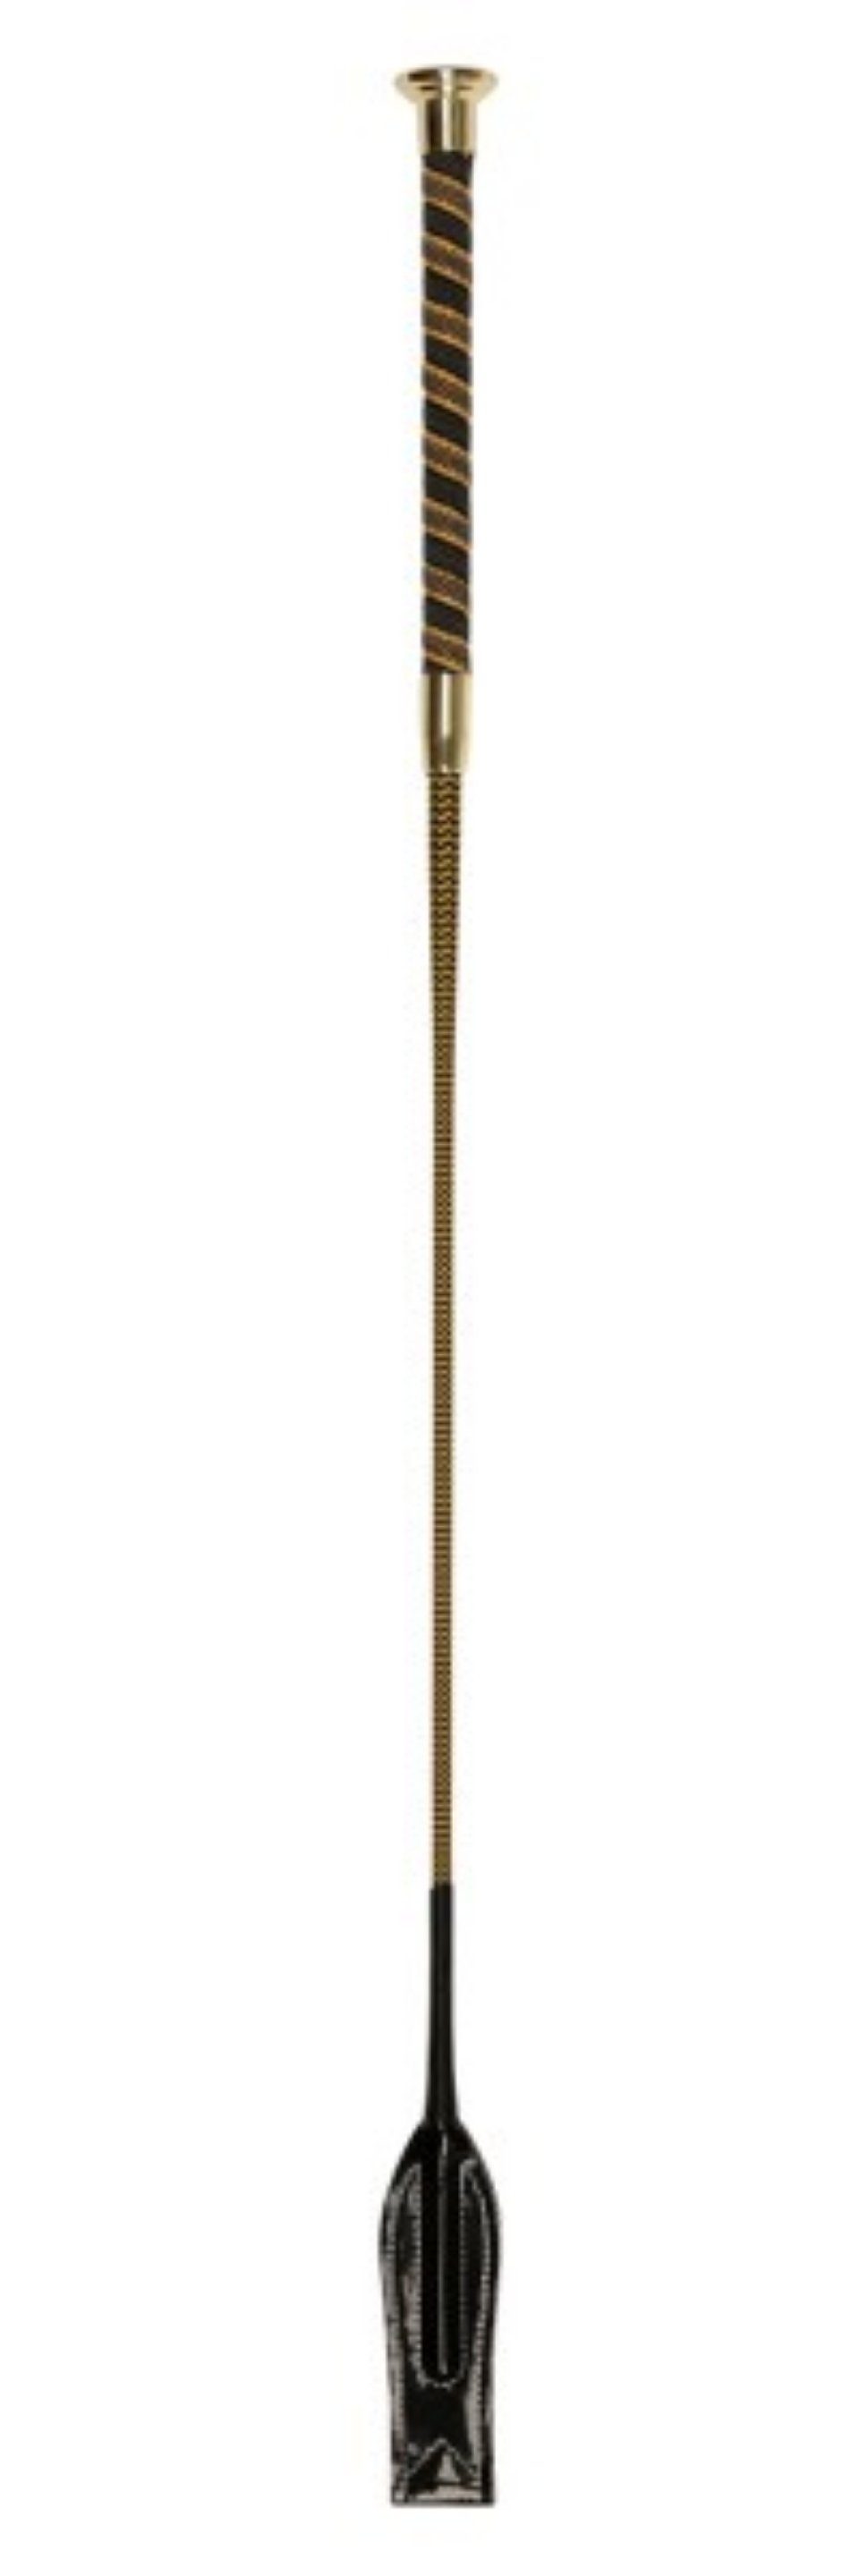 Kerbl Springgerte Springgerte mit Klatsche cm 1-tlg. 65 325997, gold